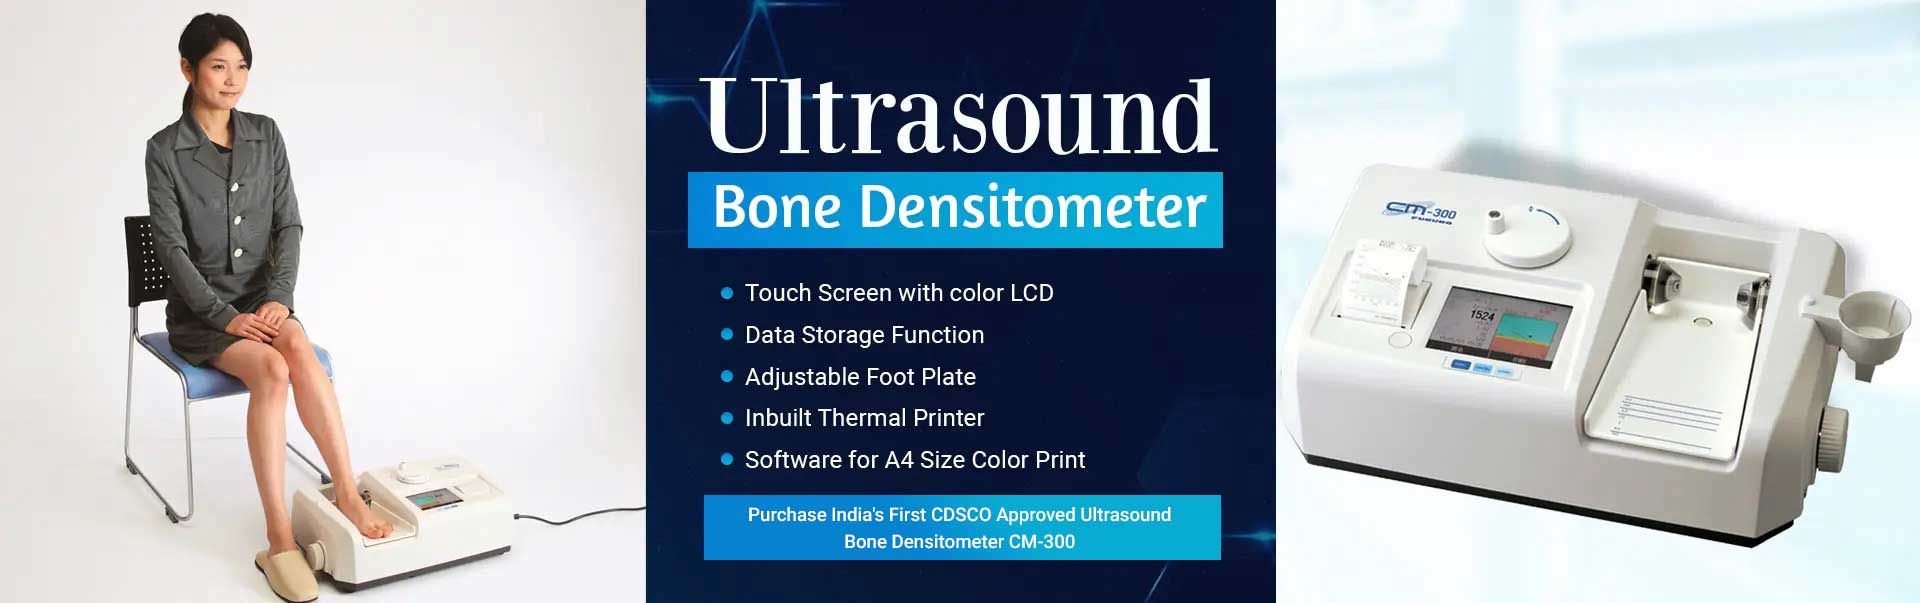 Ultrasound Bone Densitometer Manufacturers in Jamnagar